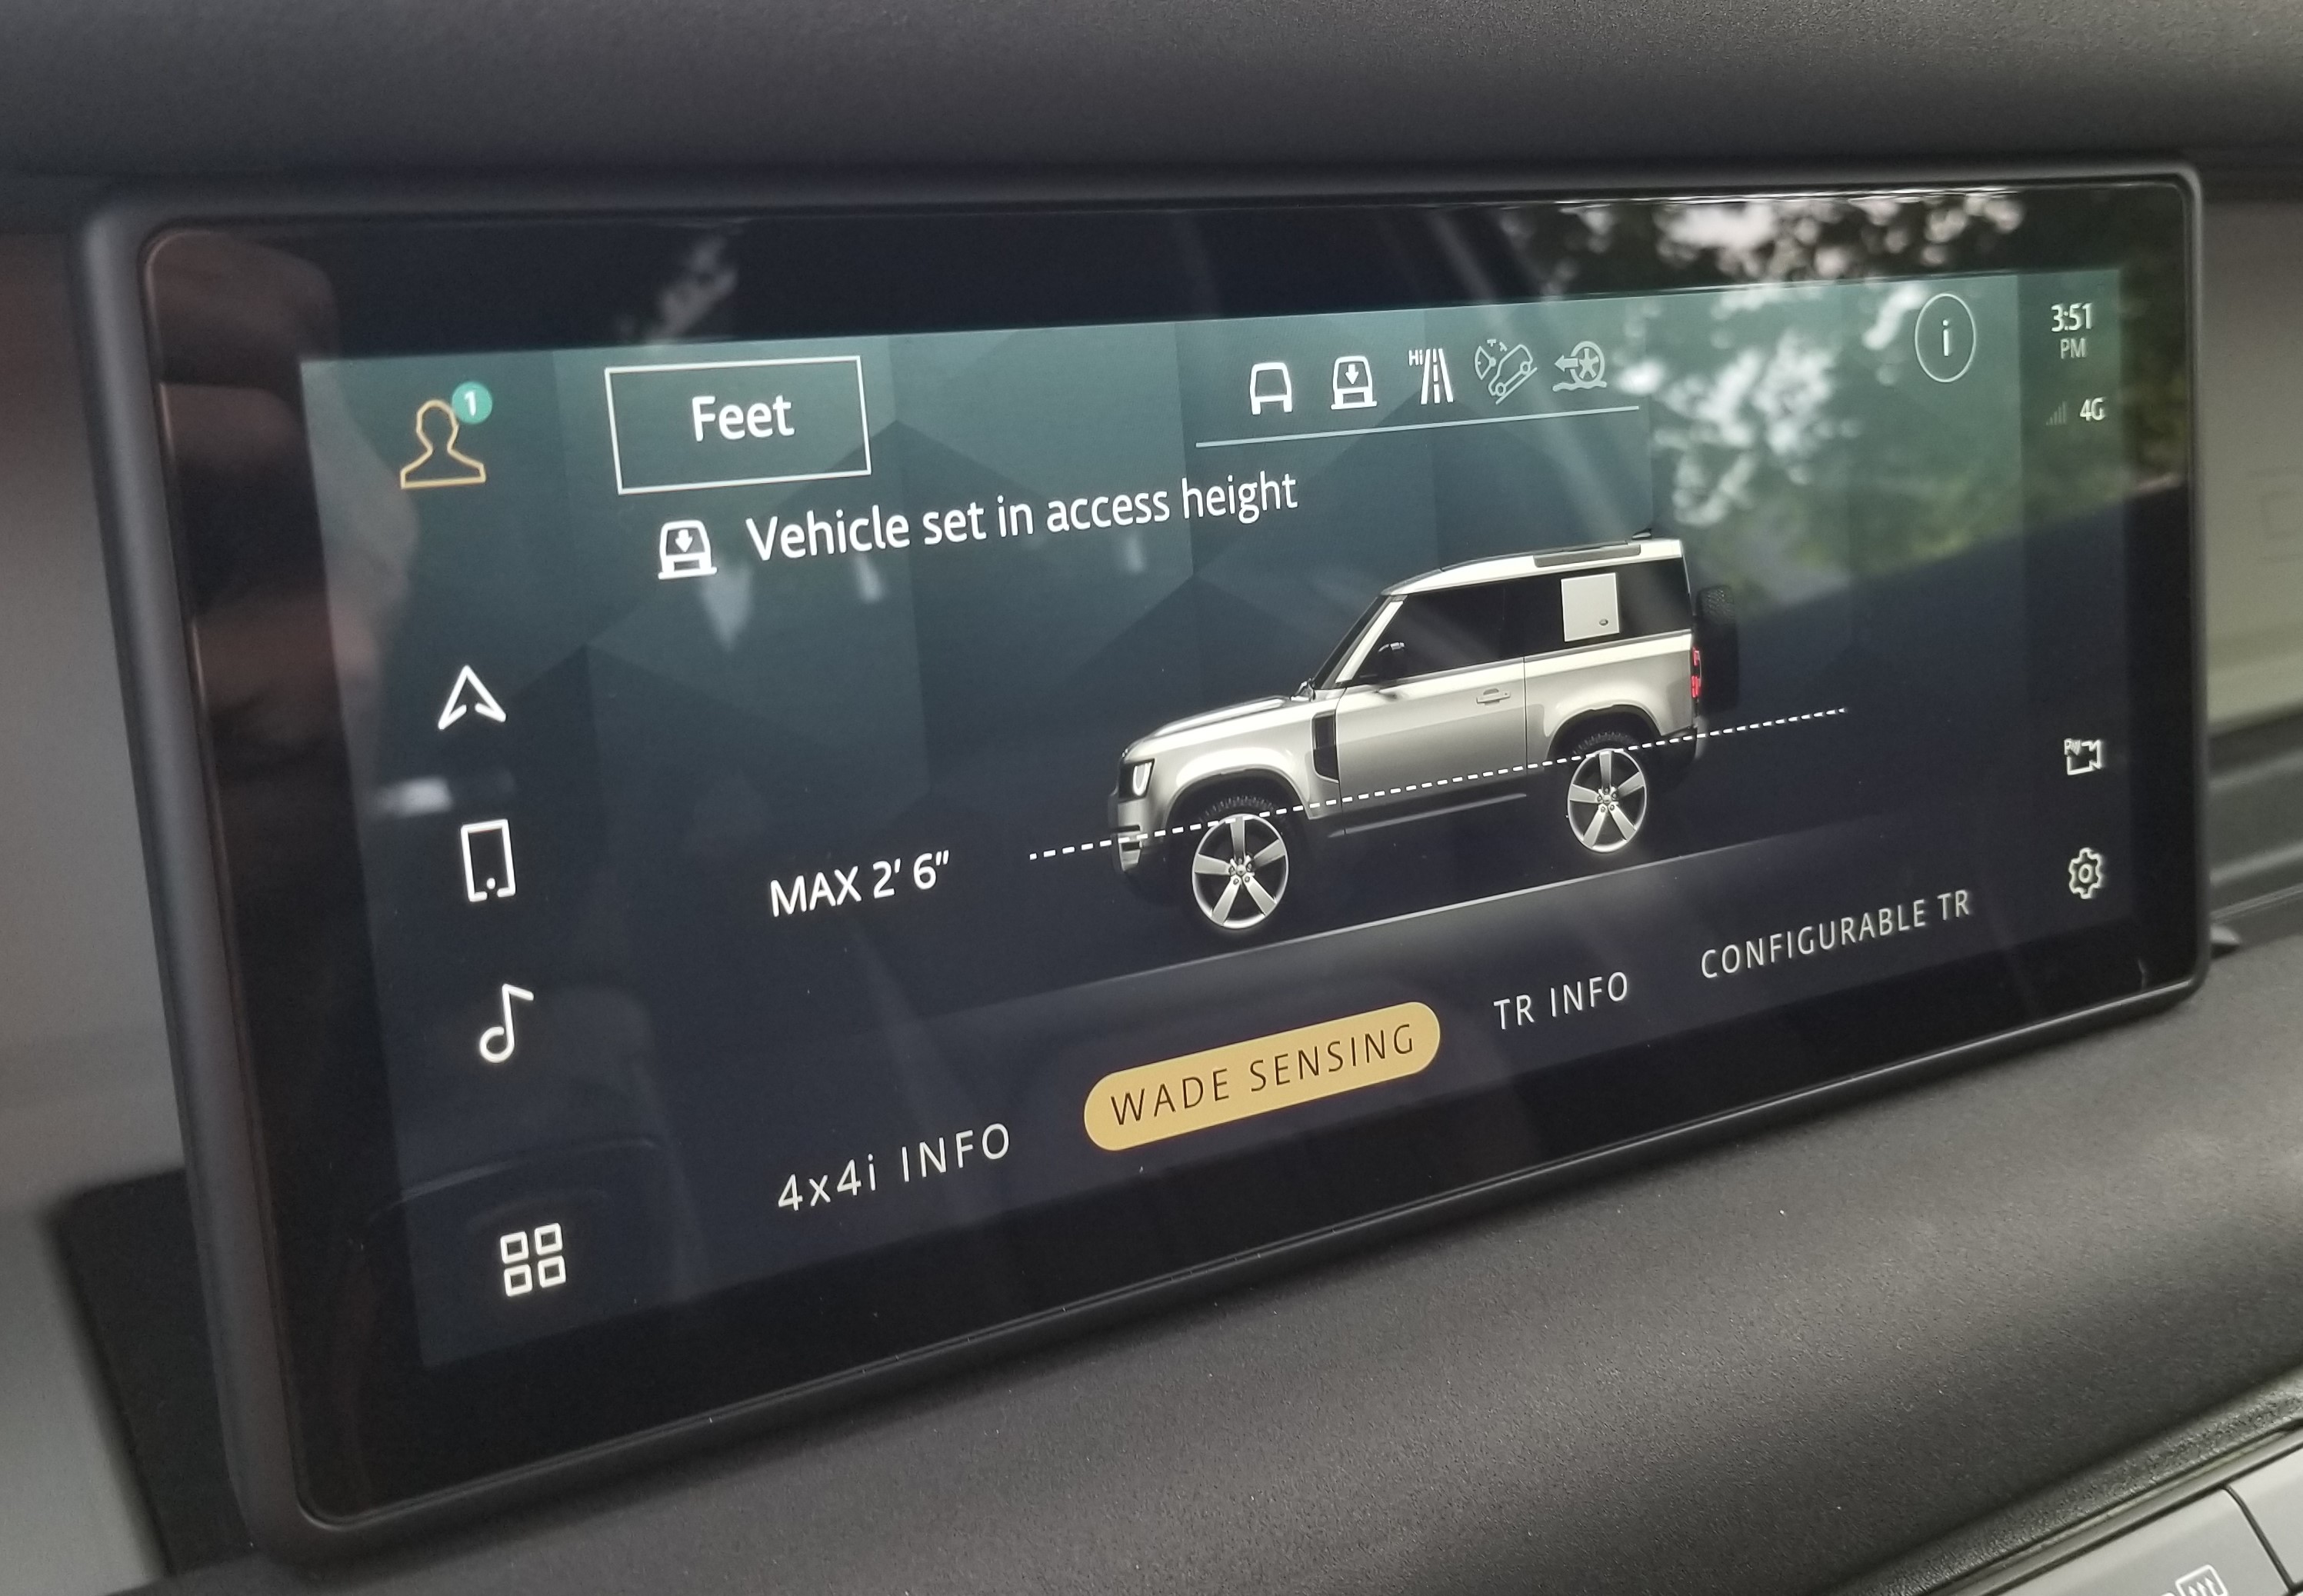 2021 Land Rover Defender wade sensing - Copy.jpg